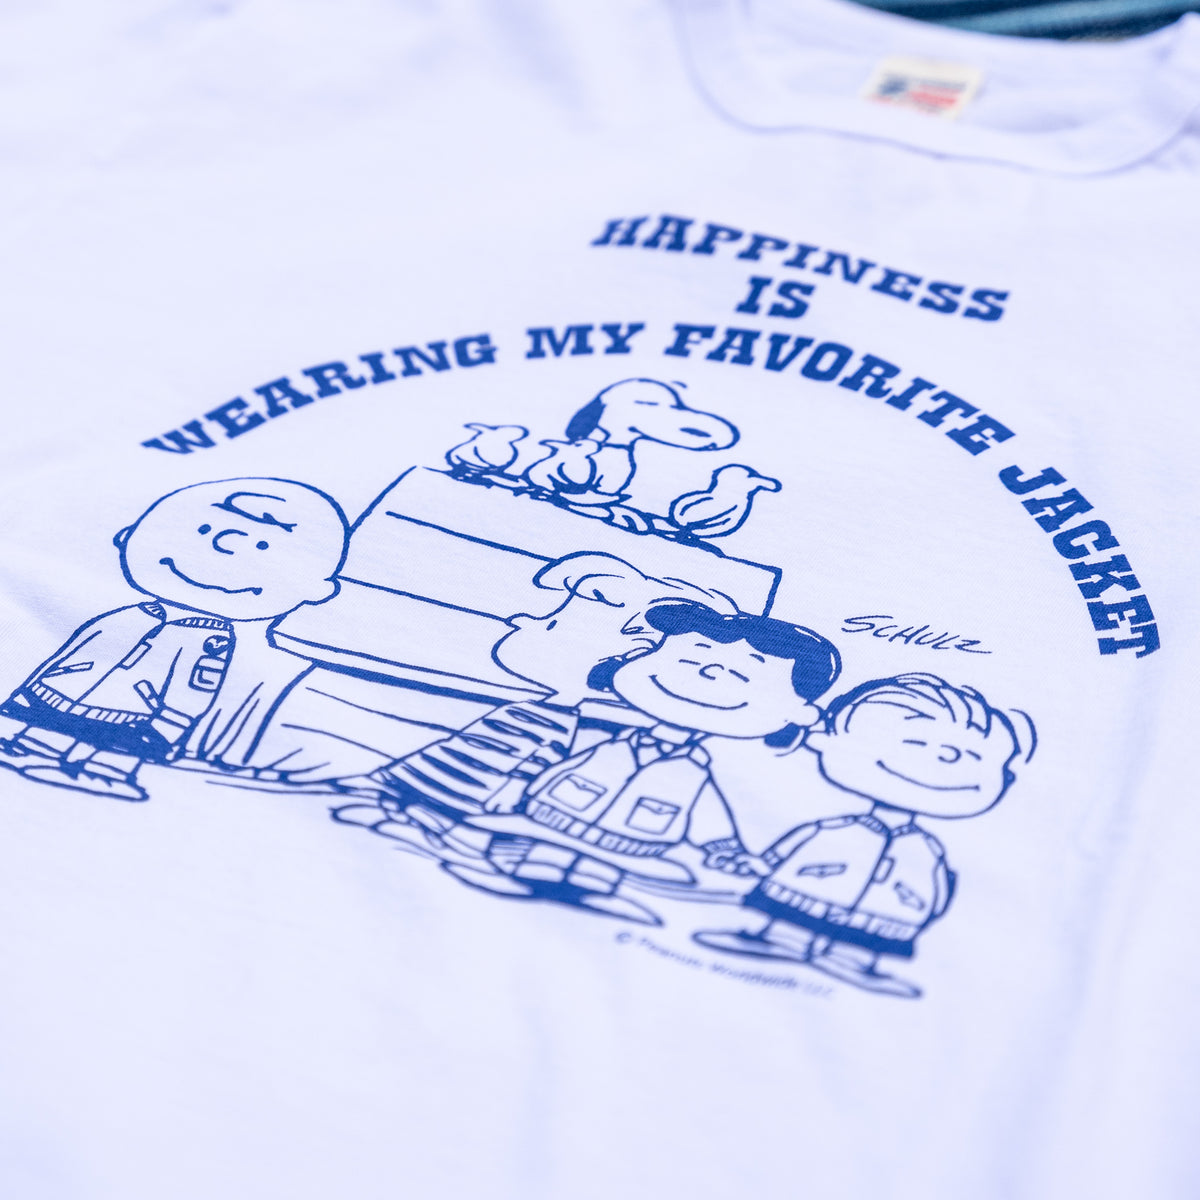 Buzz Rickson’s x Peanuts “My Favorite Jacket” Loopwheeled T-Shirt – Wh